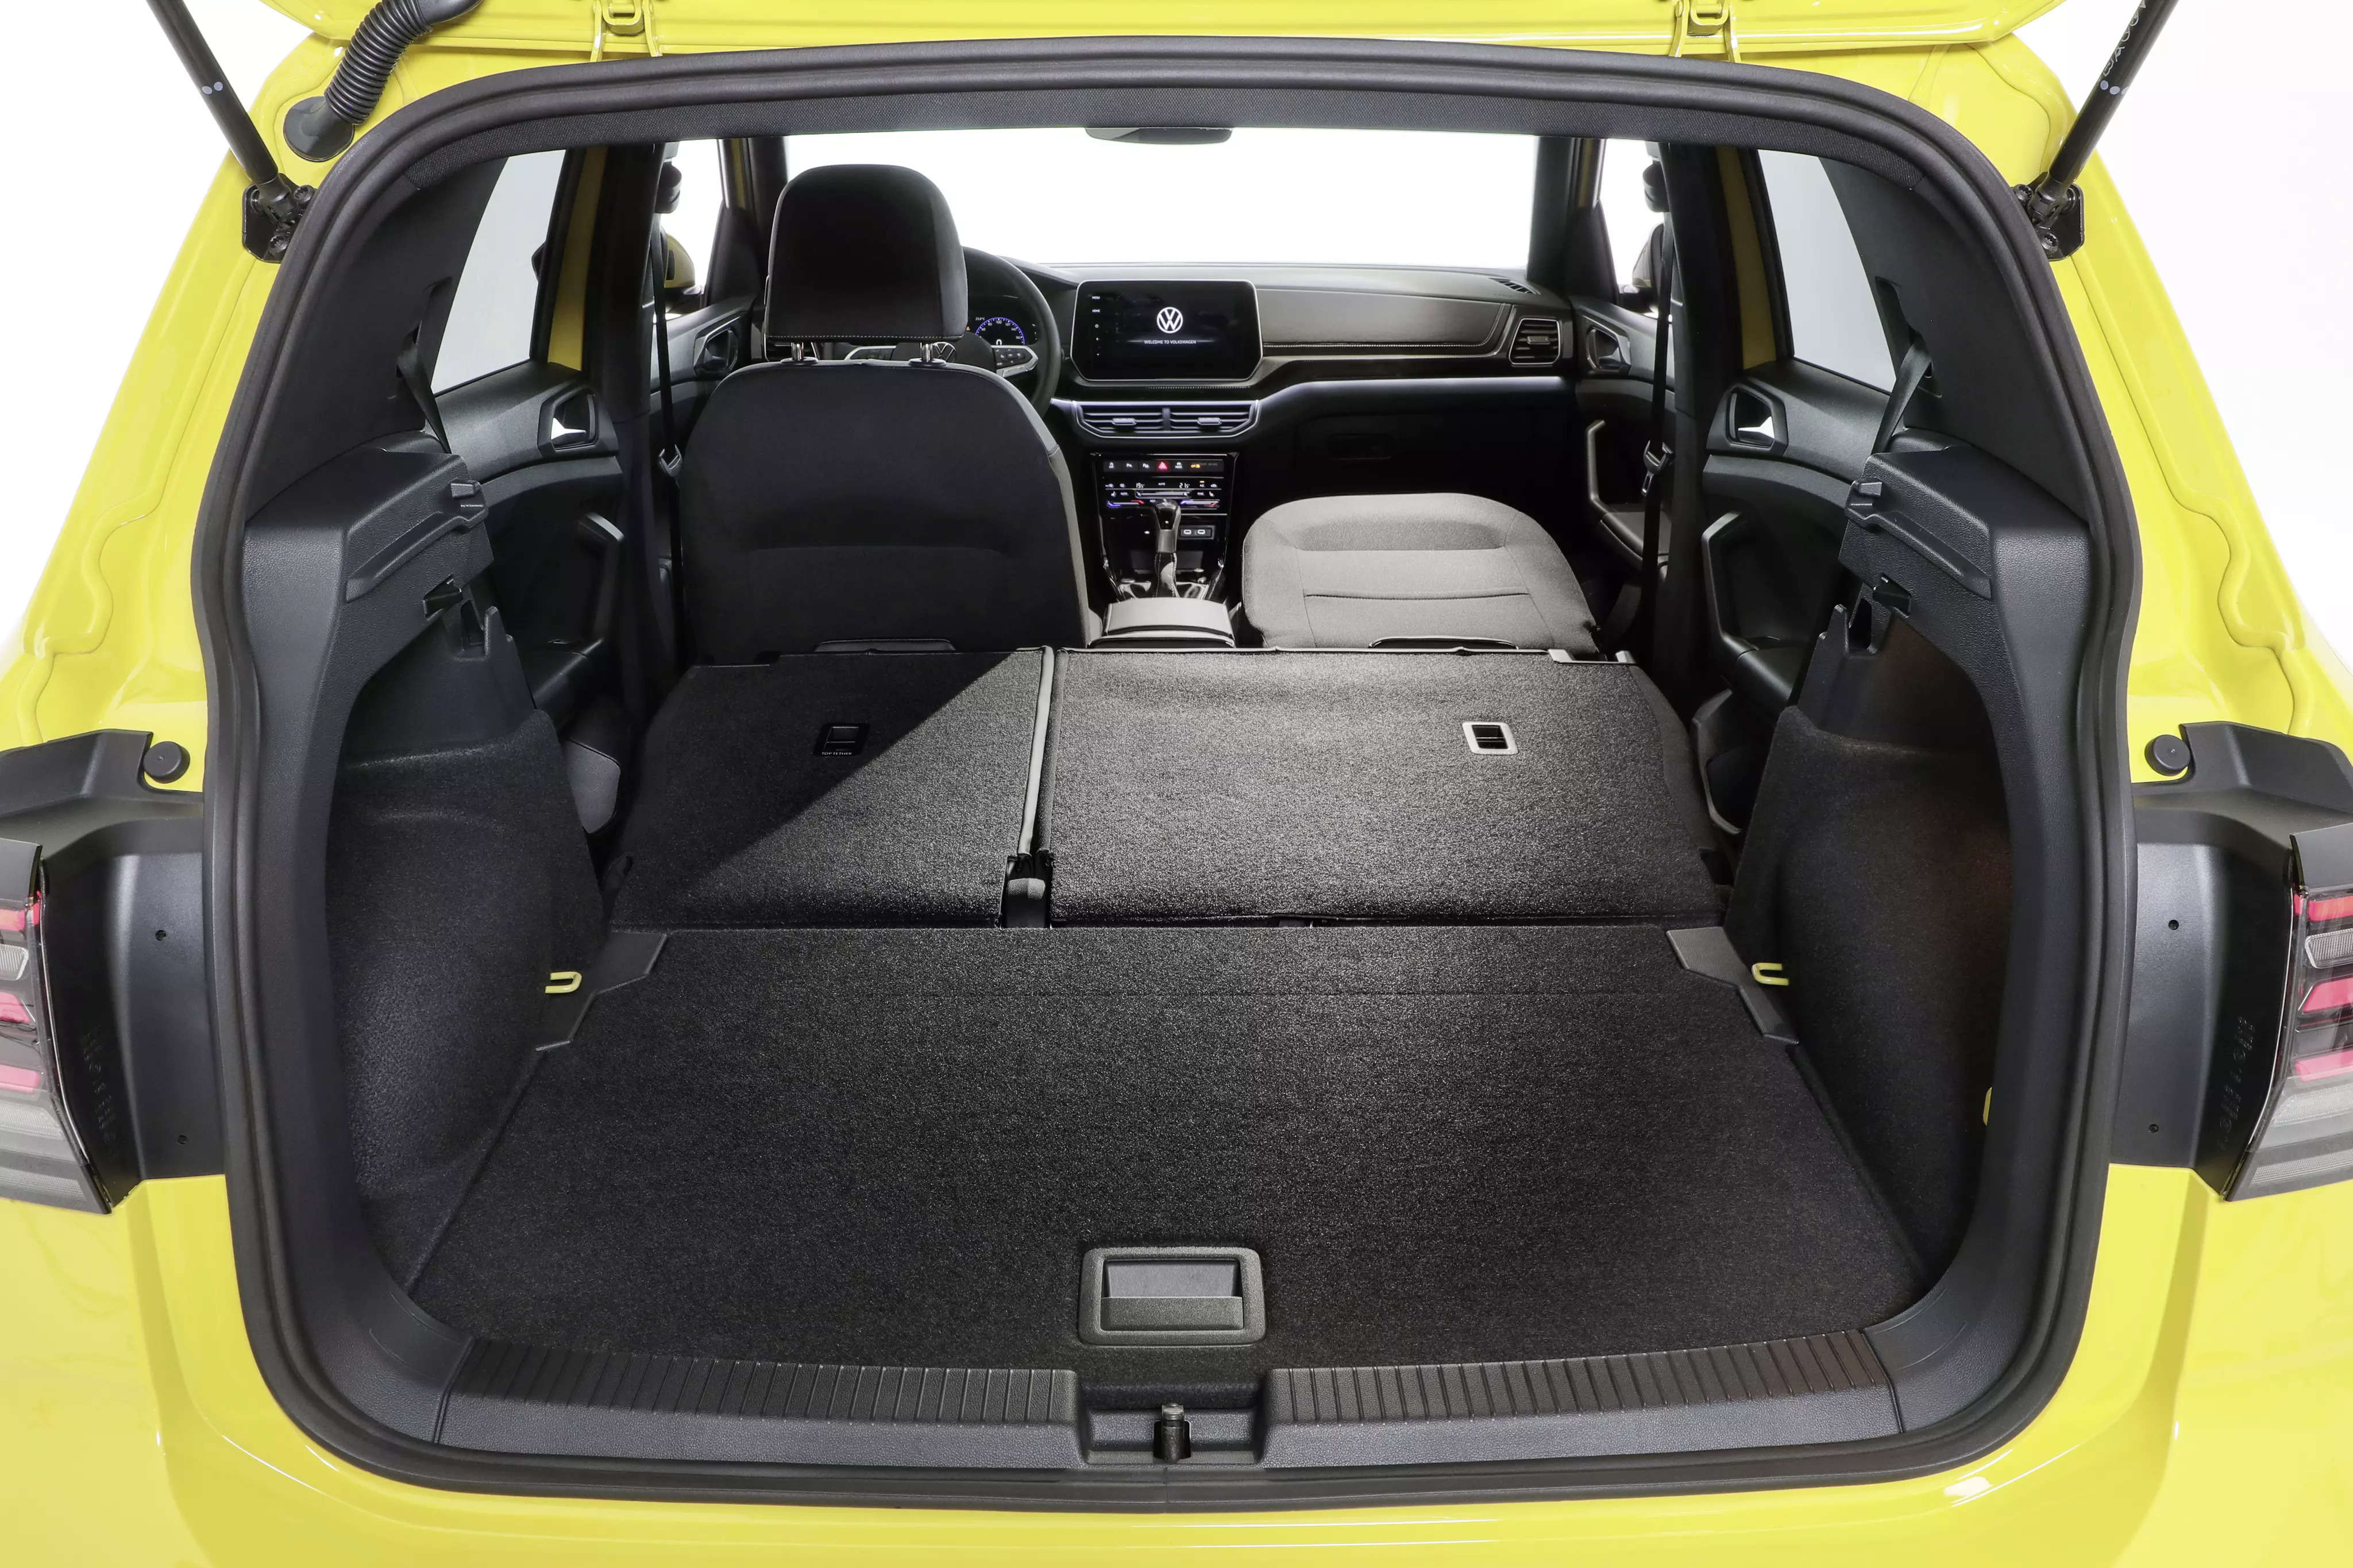 2024 VW Taigun (TCross) Unveiled Gets Audi Like Matrix Headlights